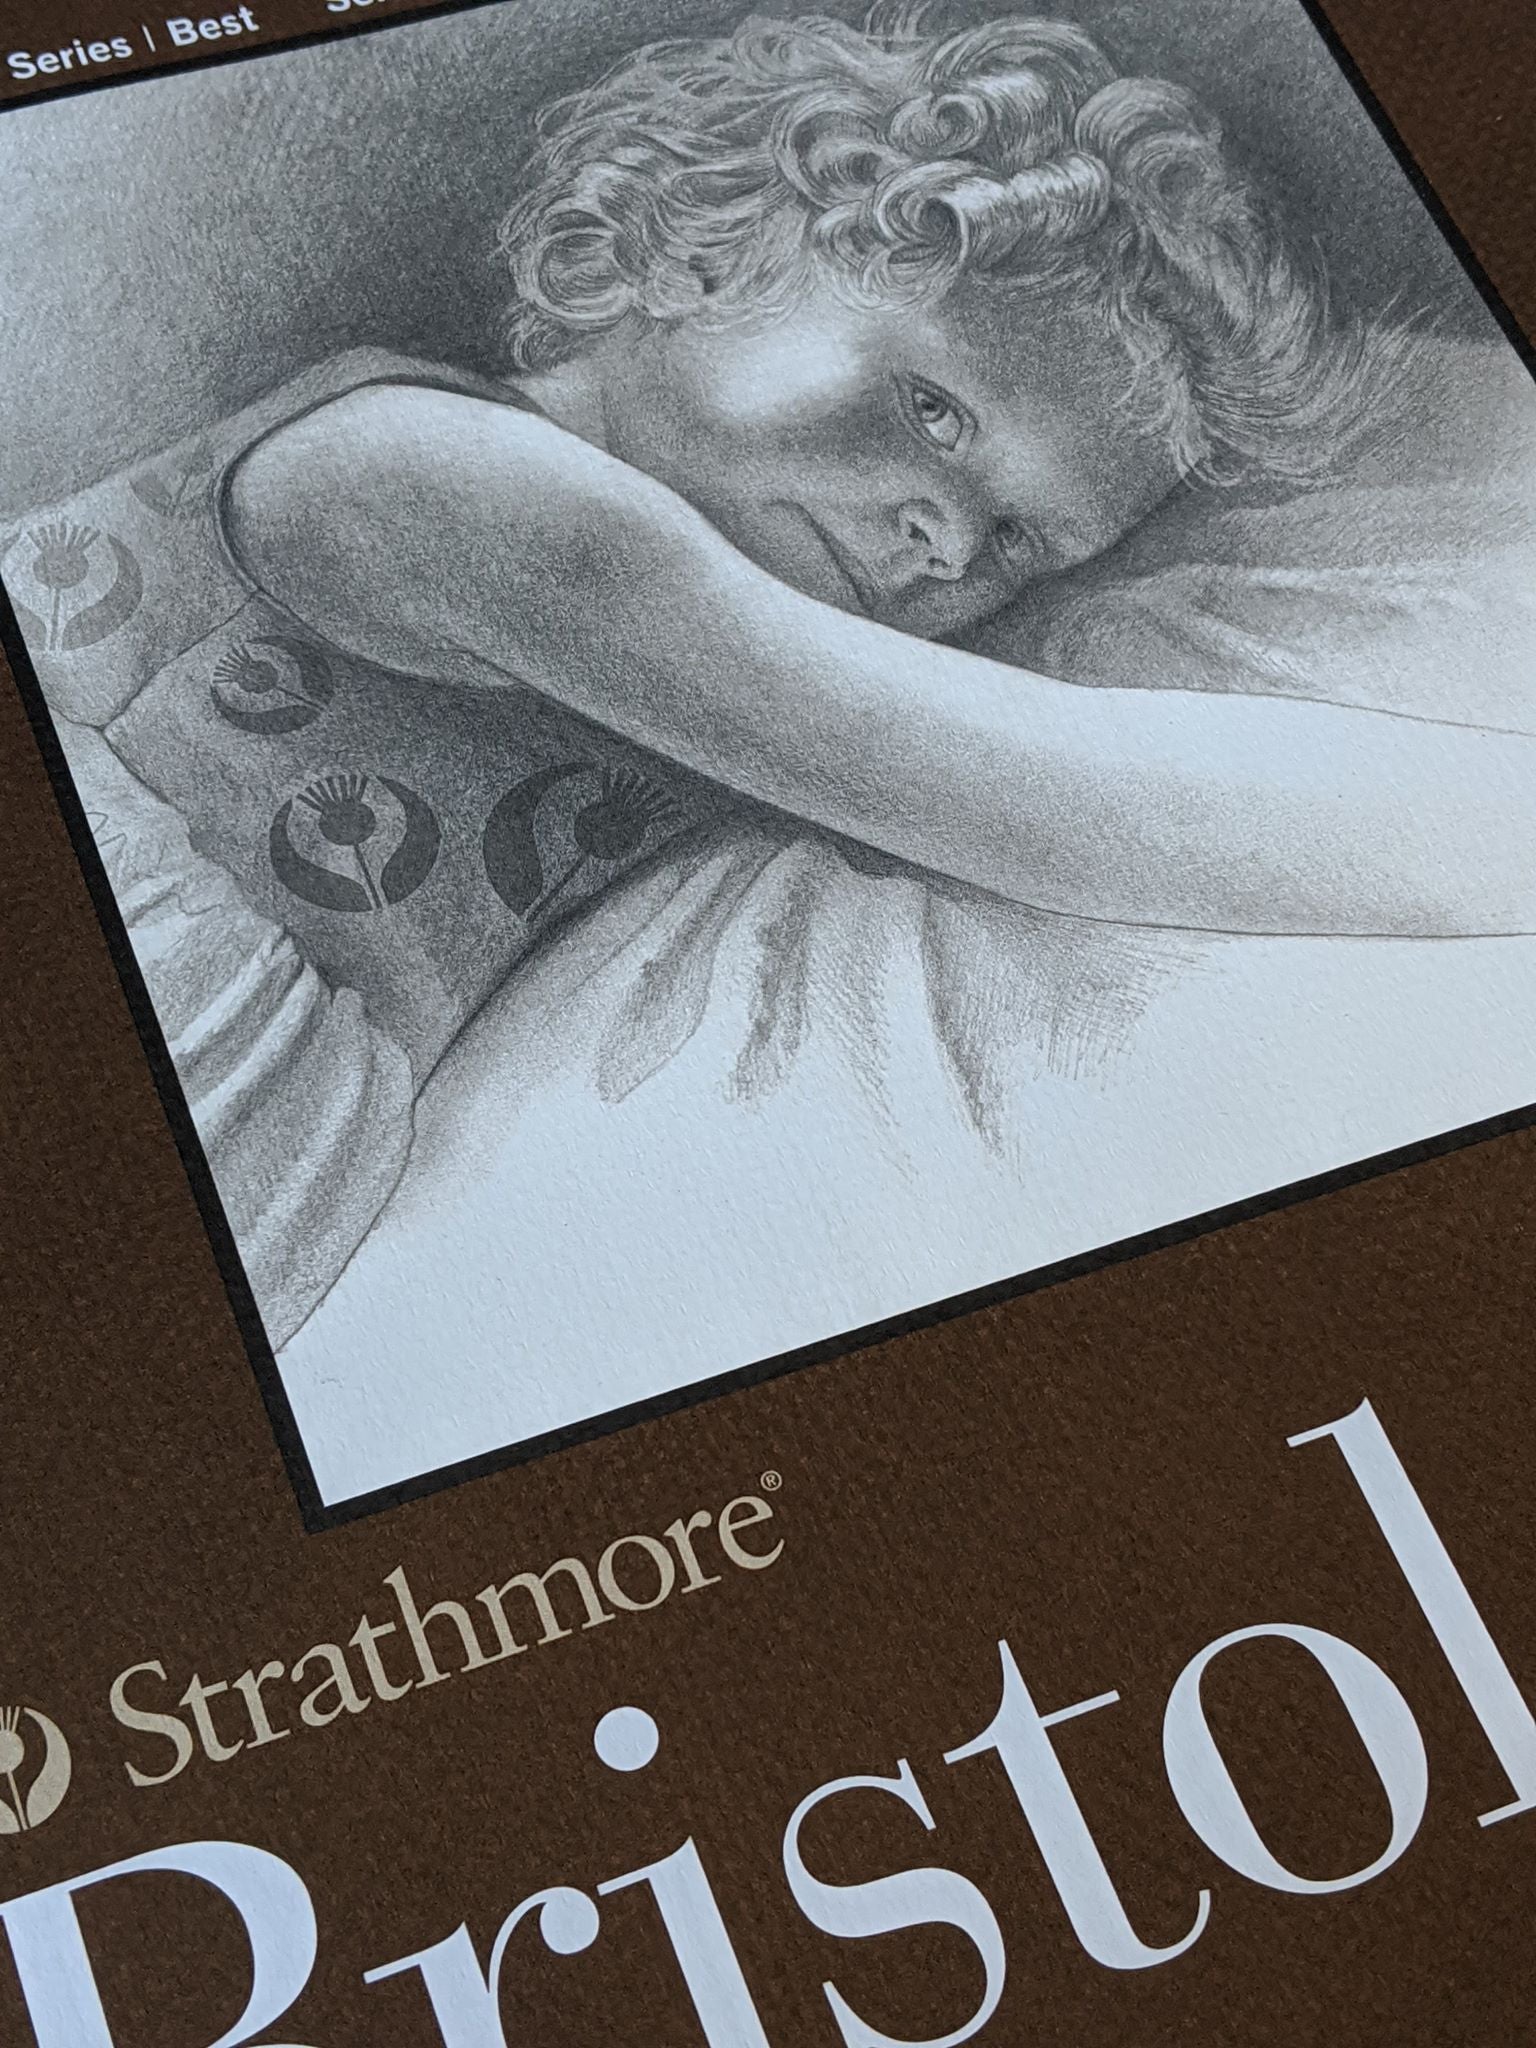 Strathmore 400 Series, Bristol Paper : 11 x 14" ( 27.9 x 35.6cm) : 15 sheets smooth